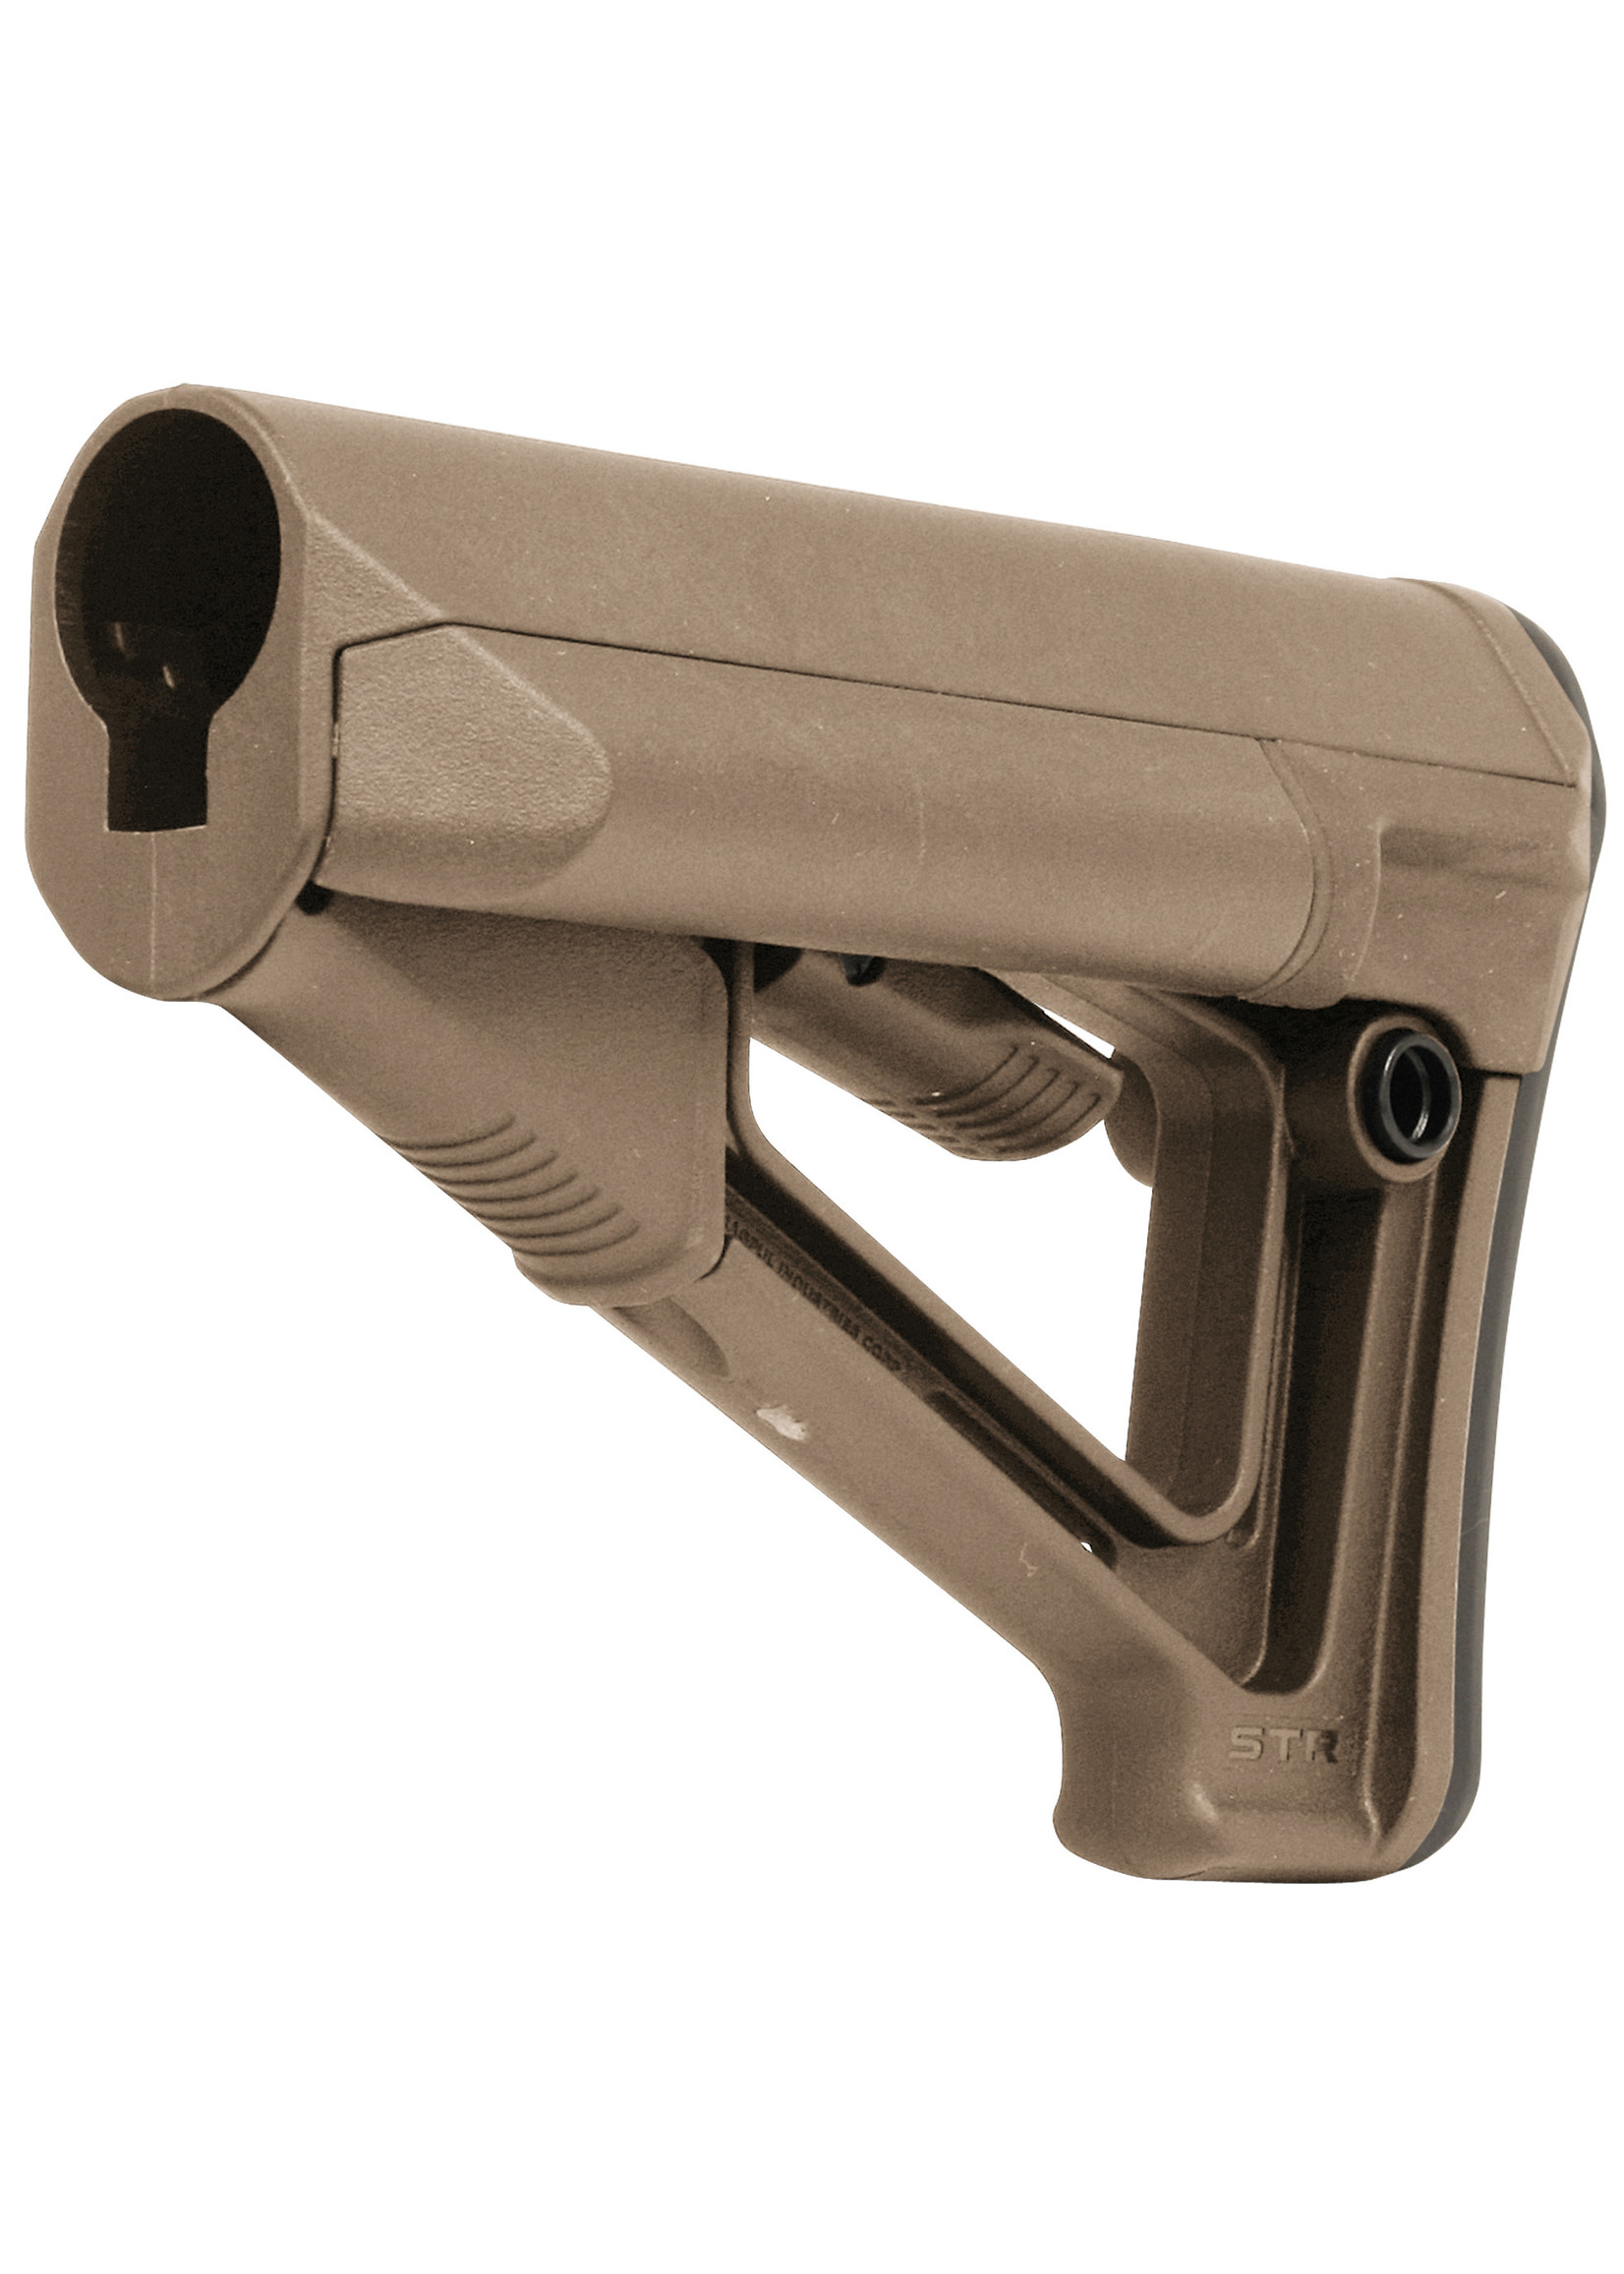 Magpul Magpul STR Carbine Stock - MIL-SPEC - Flat Dark Earth, for AR15, M16, M4